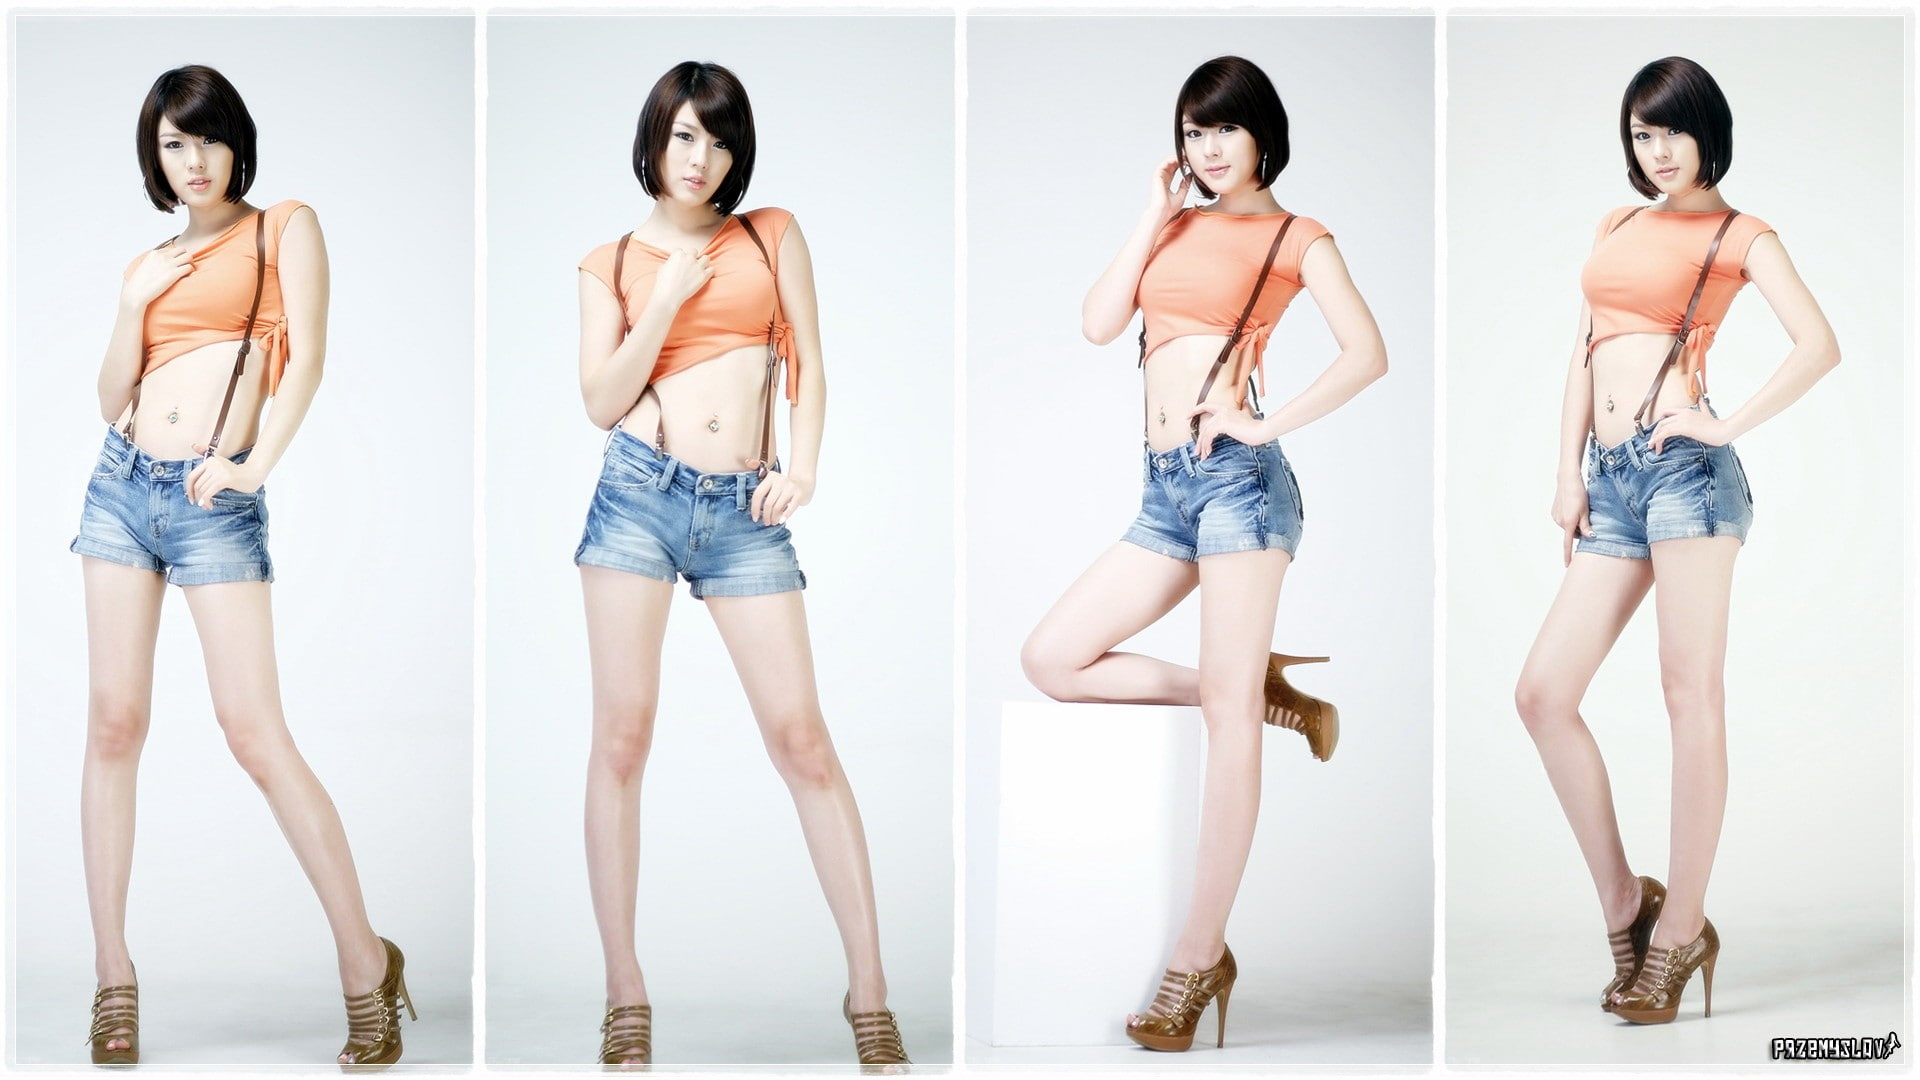 hwang mi hee asian women brunette model jean shorts, young adult